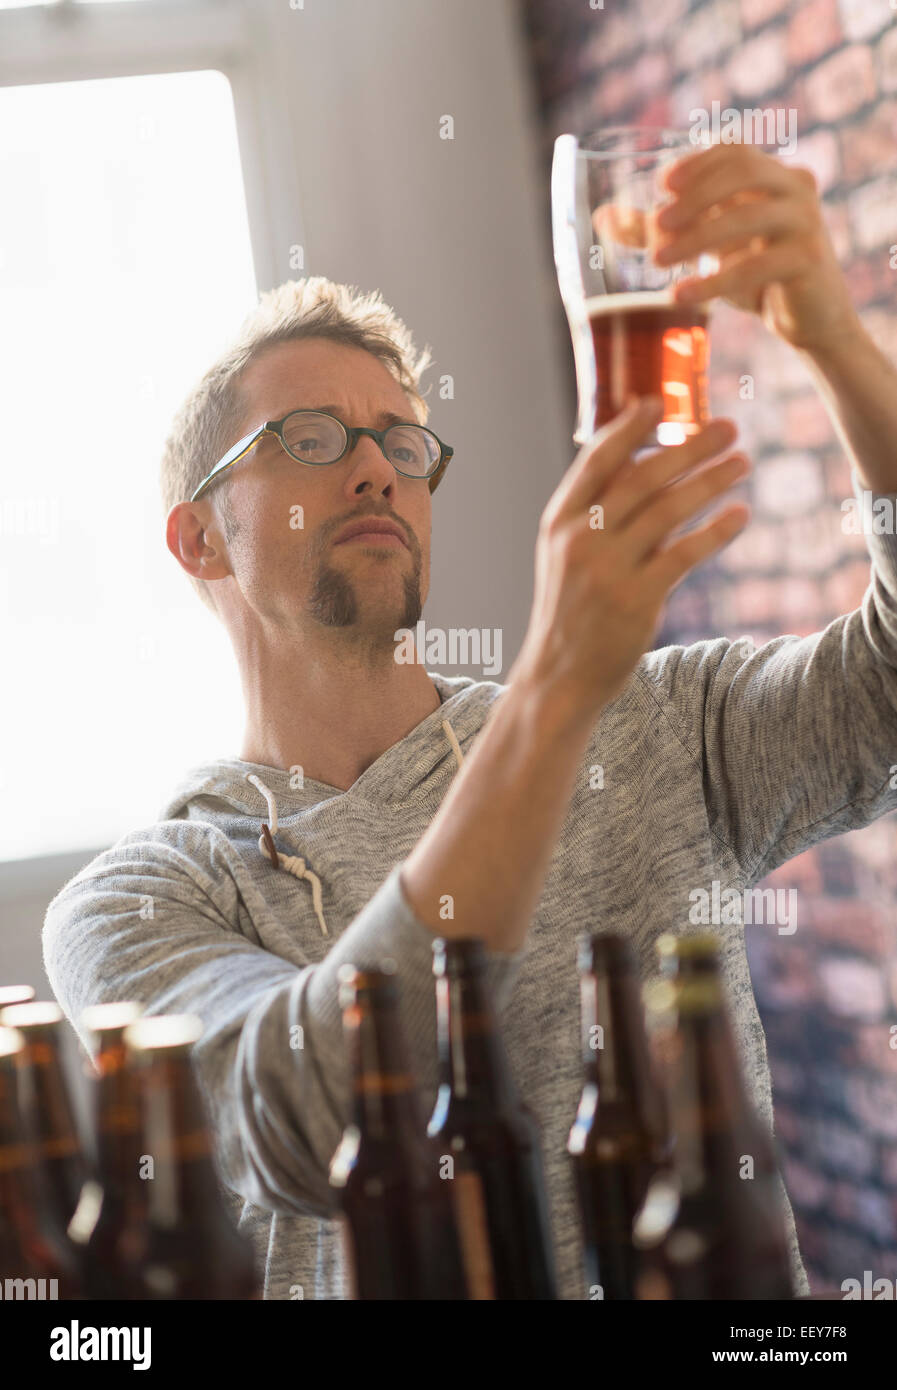 Man examining glass of beer Stock Photo